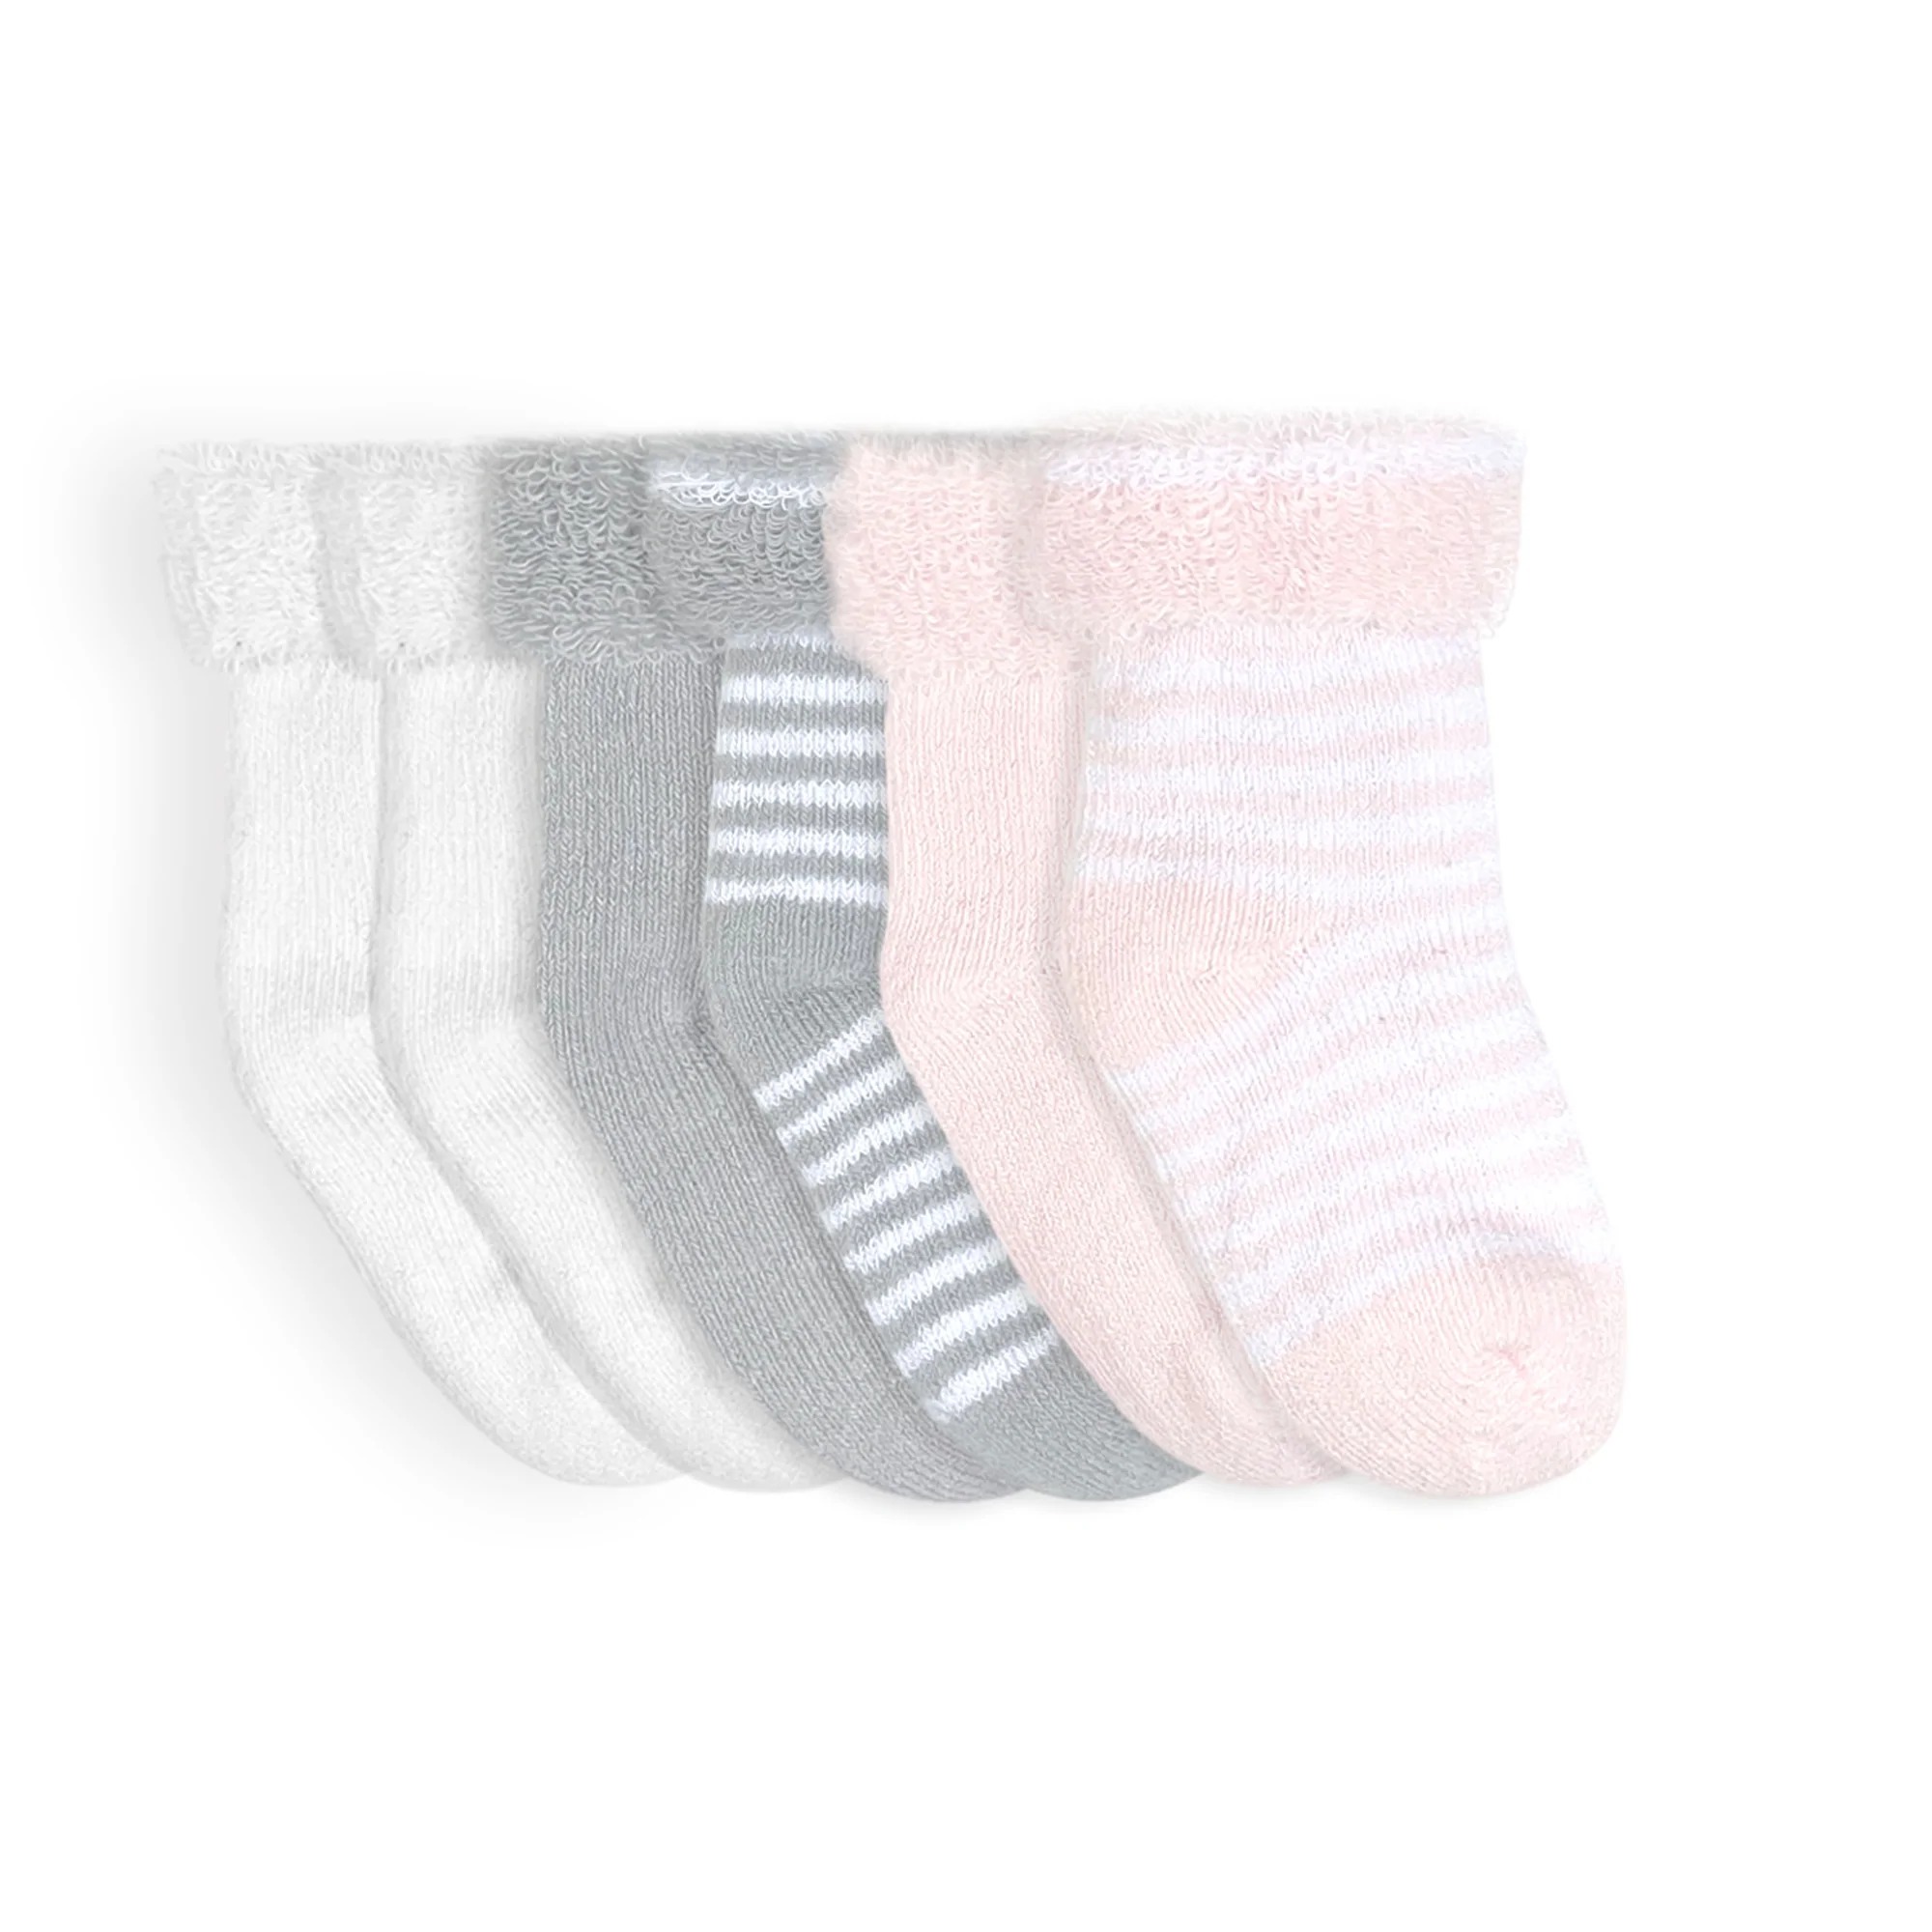 Kushies Terry Newborn Socks 6 Pack - Pink - 0-3 Months